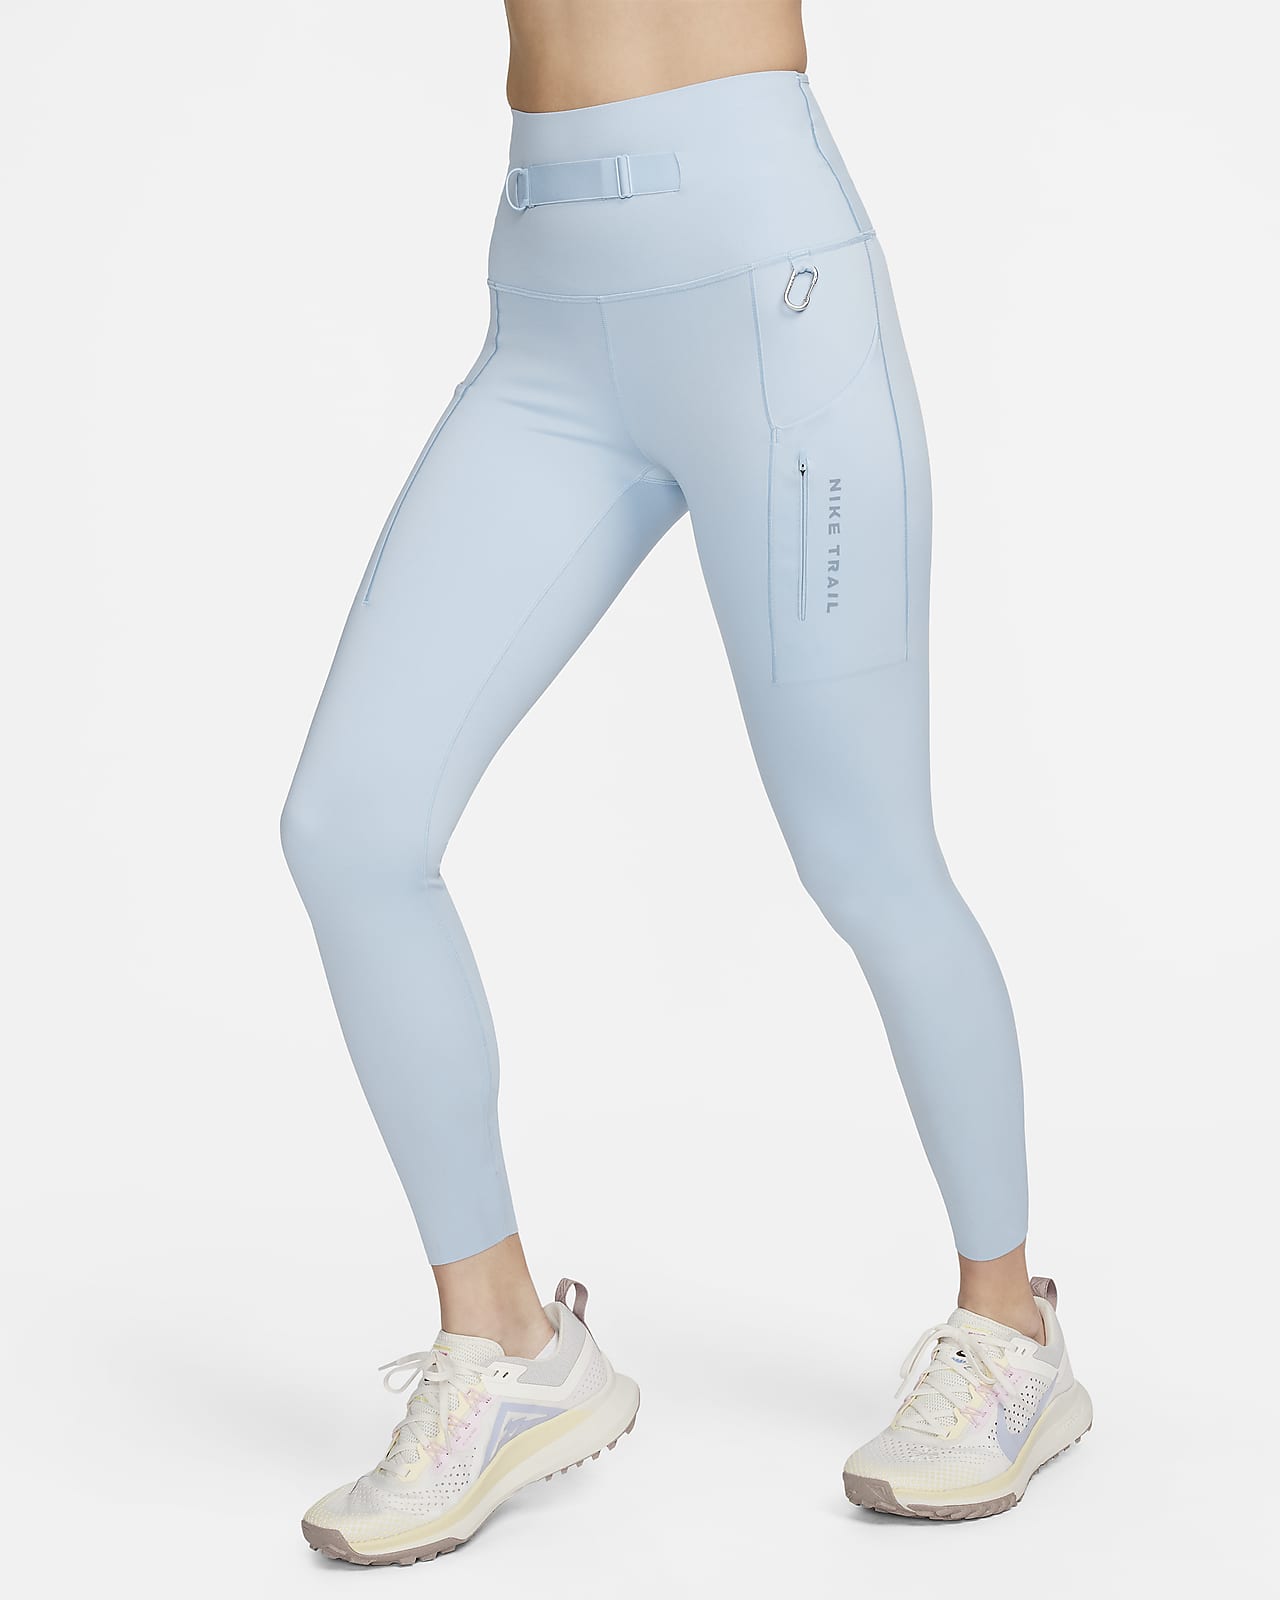 Nike Sunset Legging Sport Turquoise, Shipped Free at Zappos